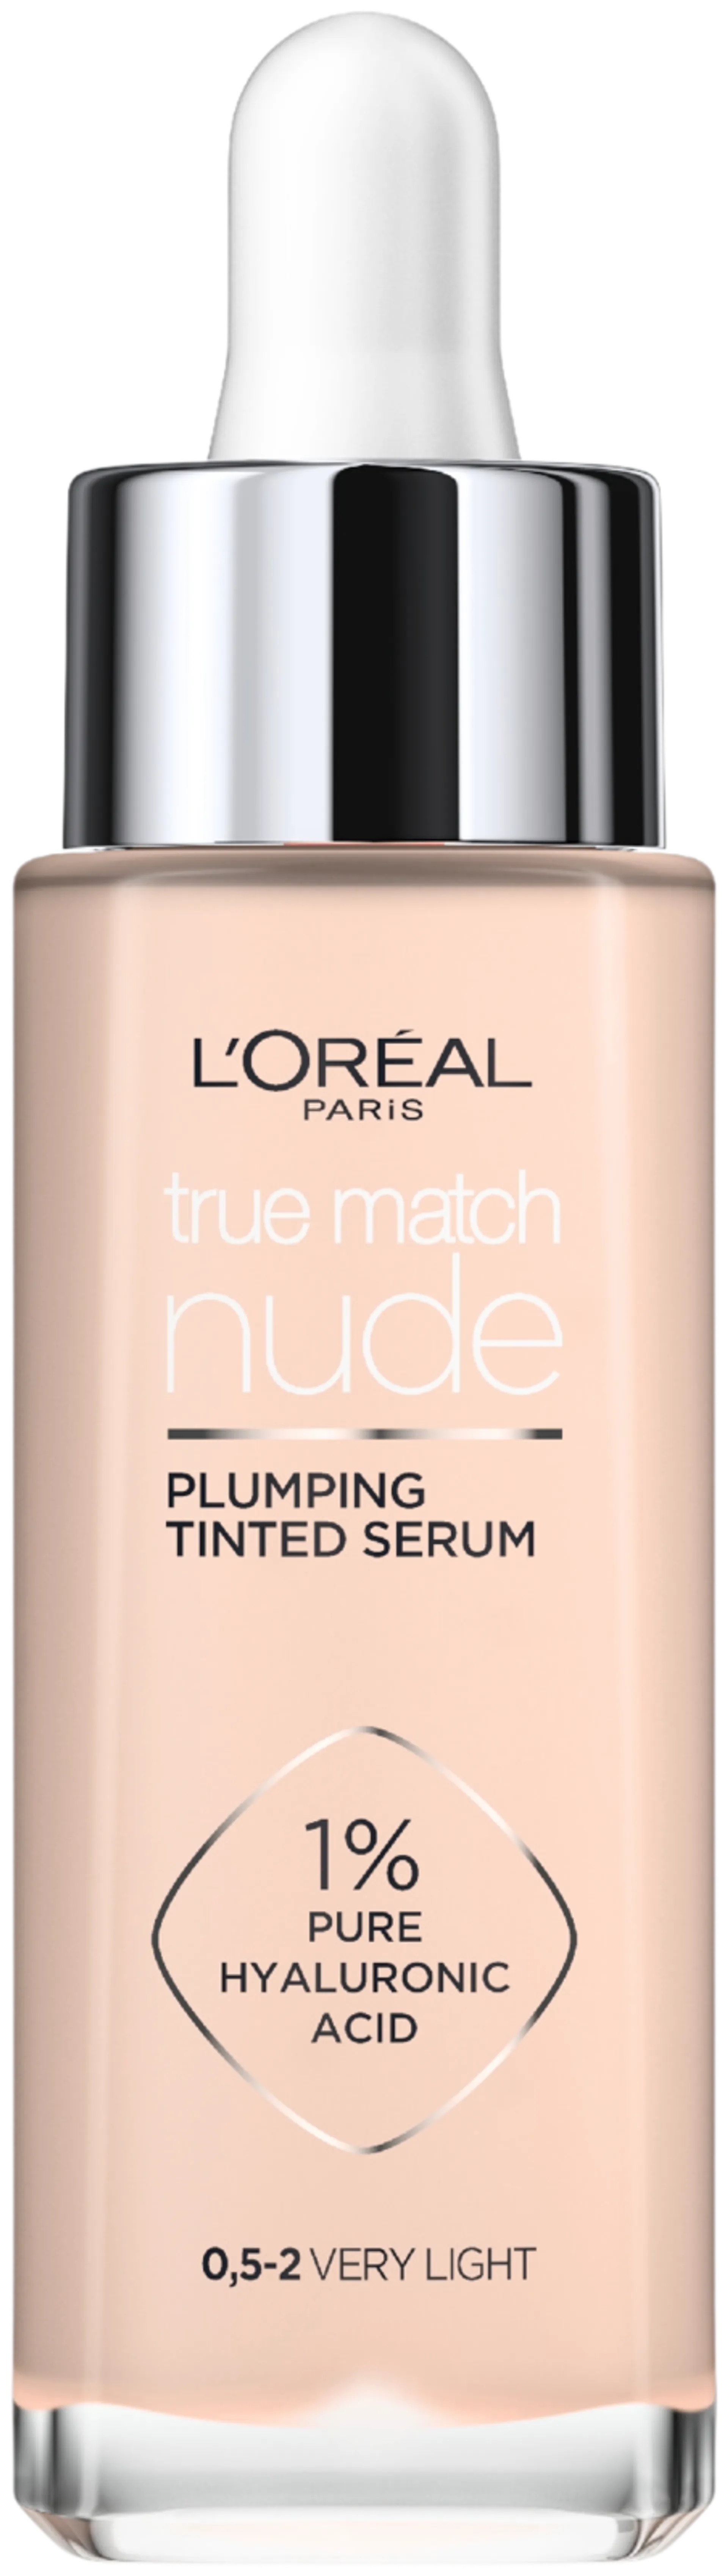 L'Oréal Paris True Match Nude Plumping Tinted Serum meikkivoide 30 ml - 0,5-2 Very Light - 1